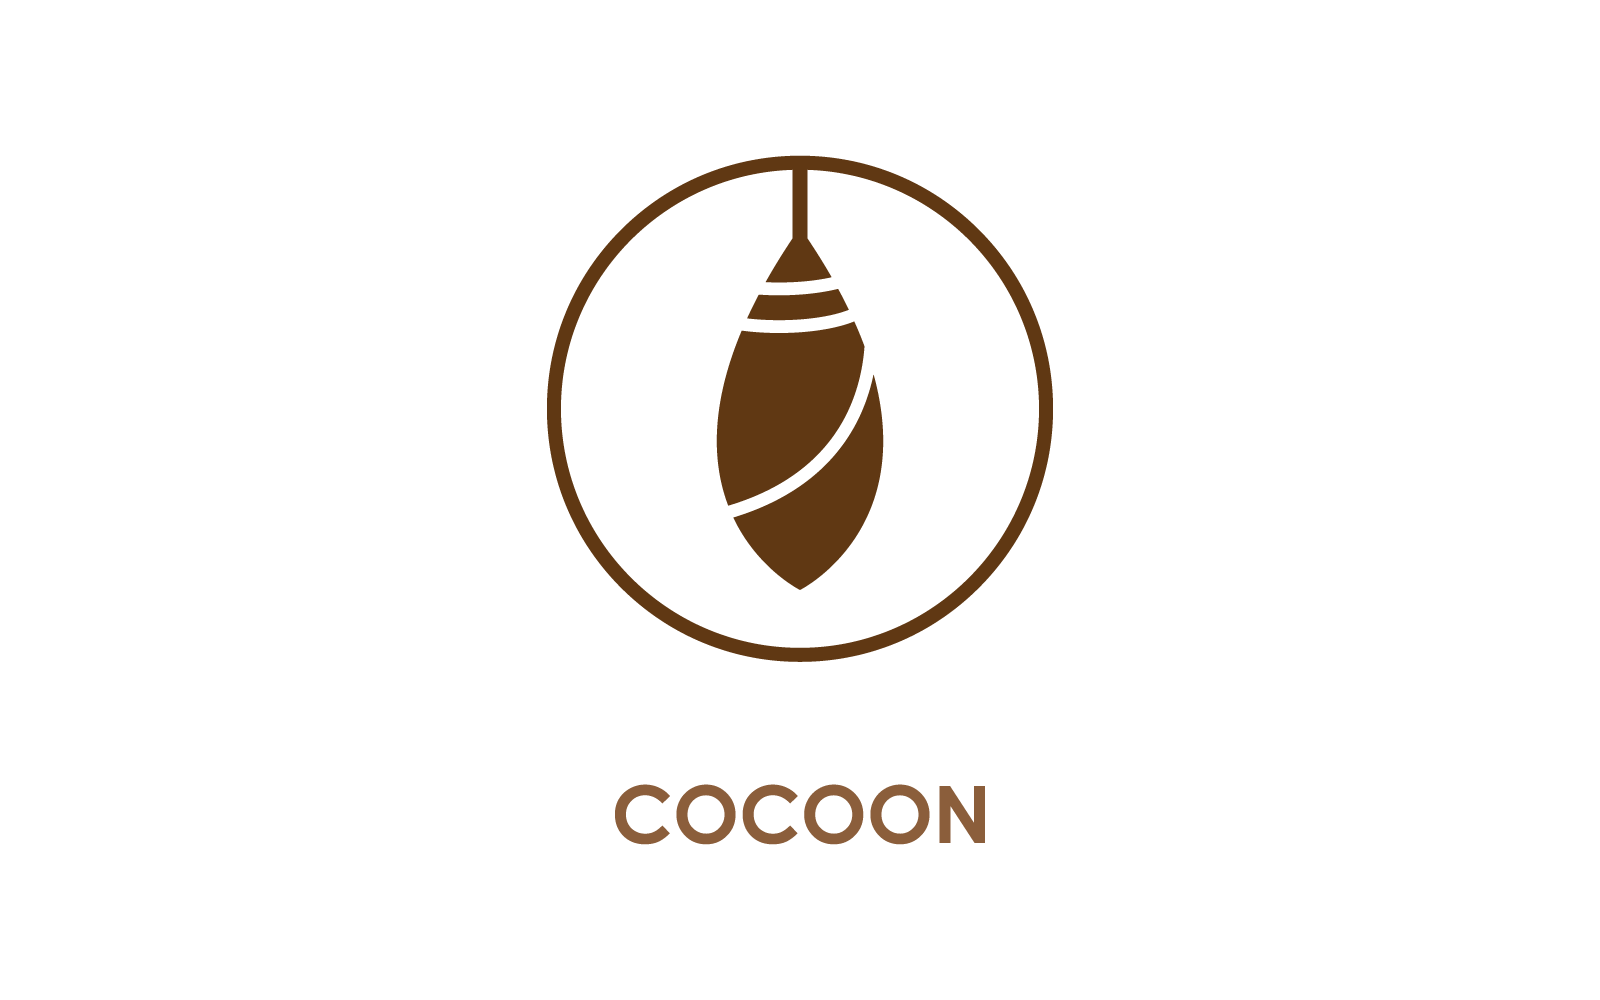 Cocoon illustration logo icon vector design